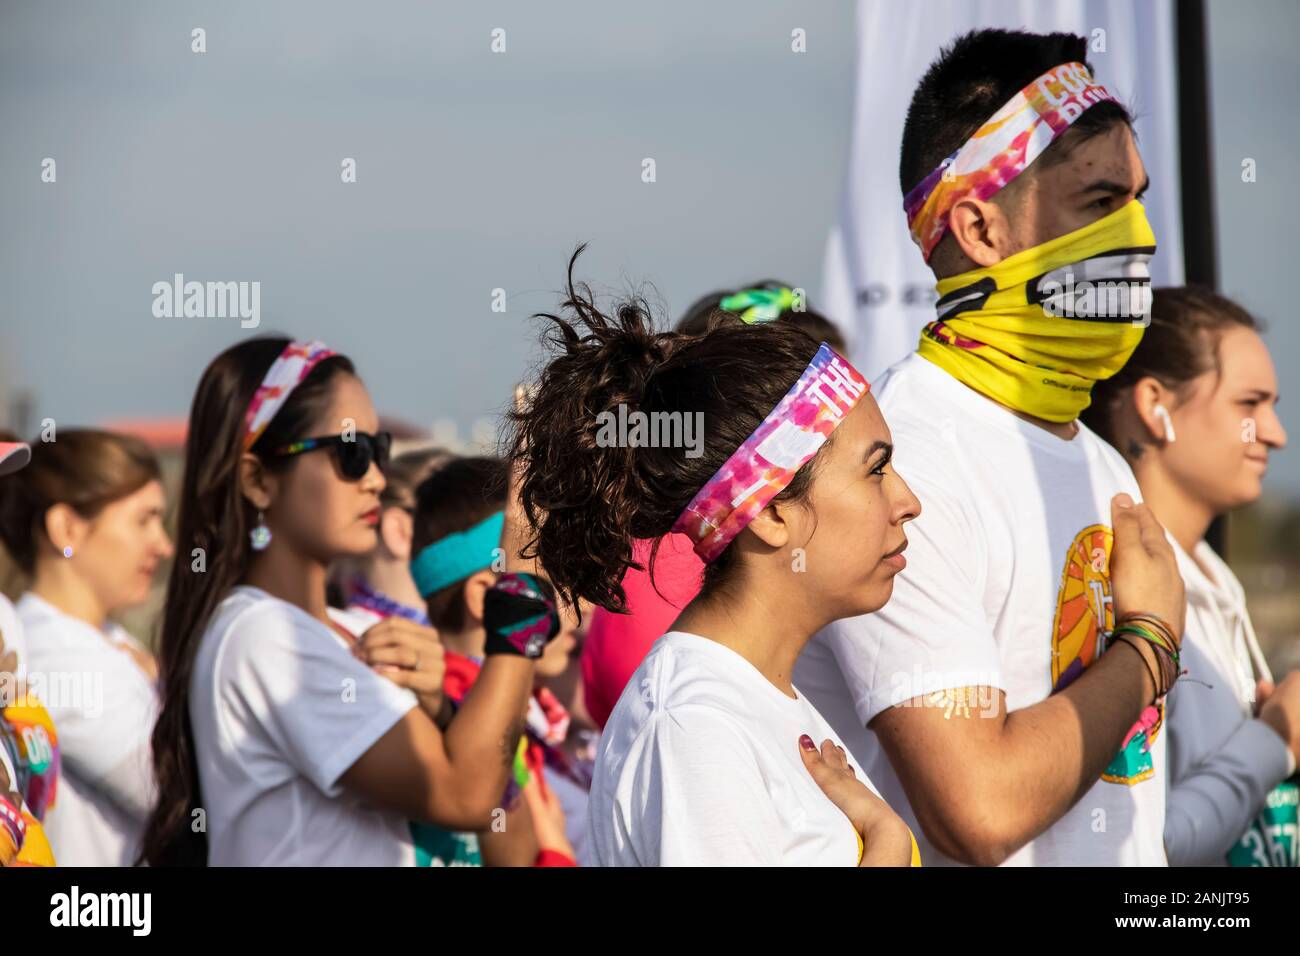 4-6-2019 Tulsa USA Woman Dressed for Color Run übergibt dem Spieler National Anthem mit Publikum - selektiver Fokus - das Herz Stockfoto